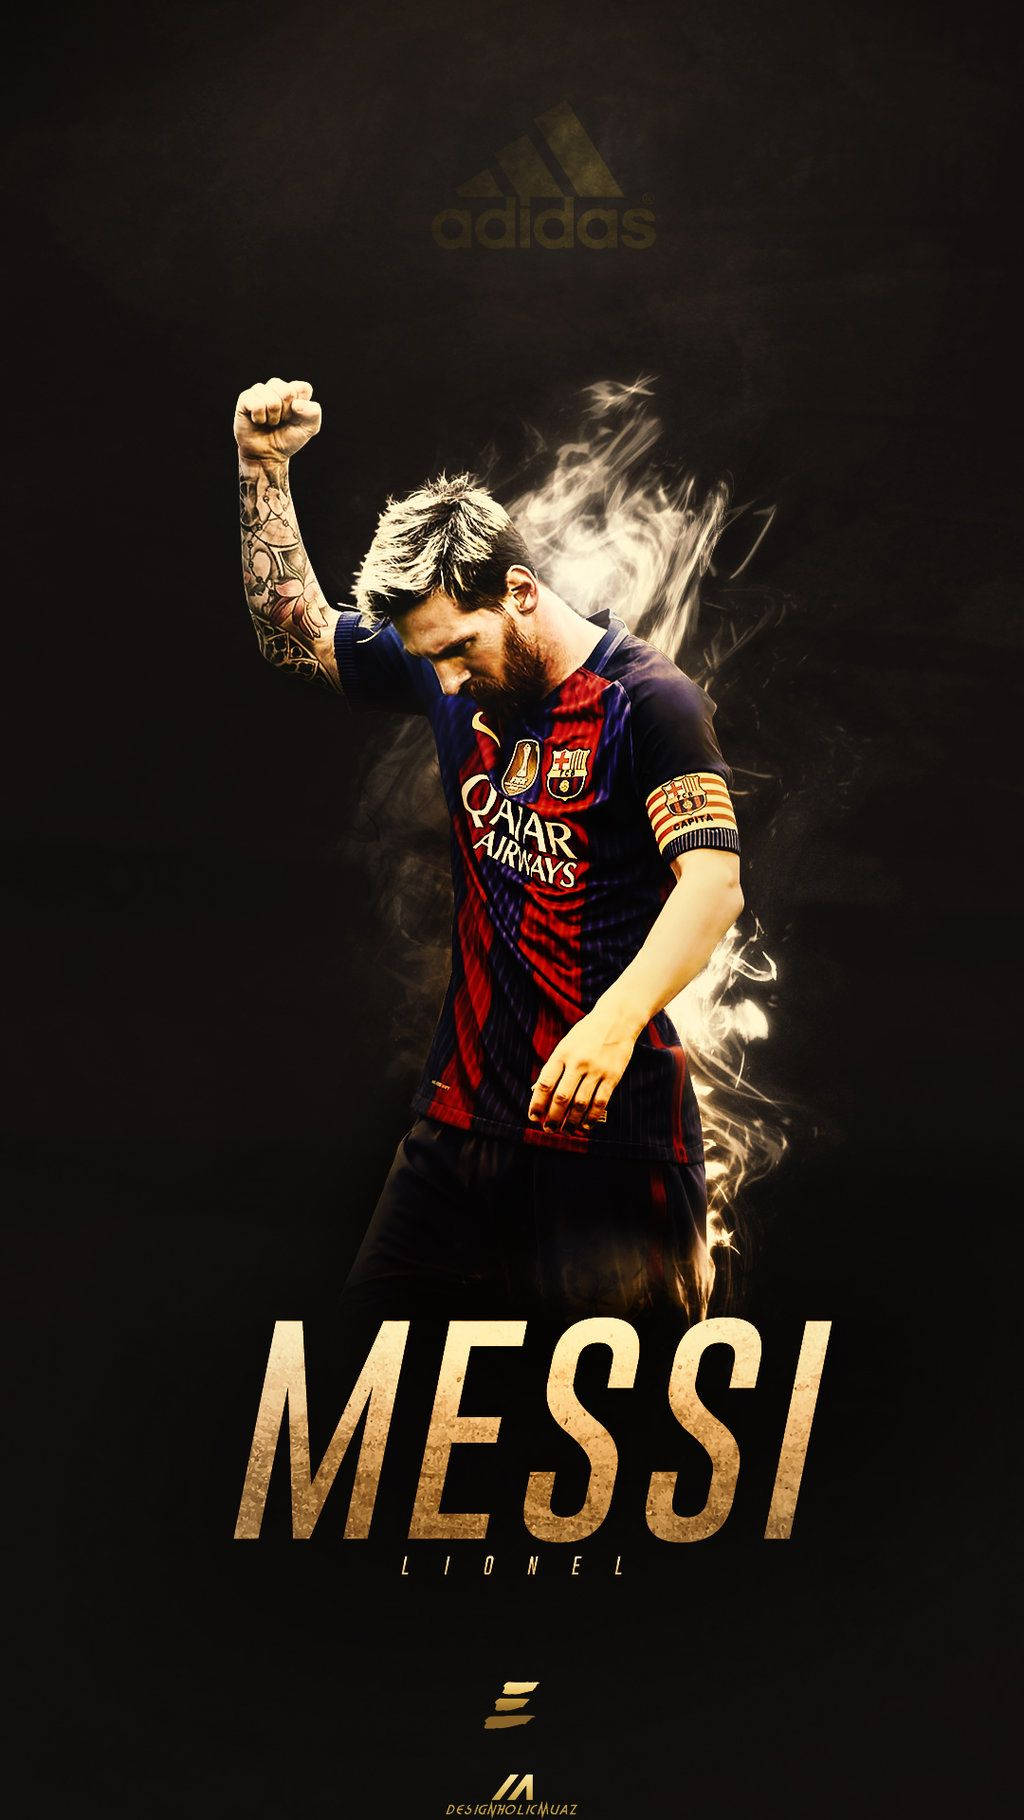 Messi Lionel Fist Pump Wallpaper